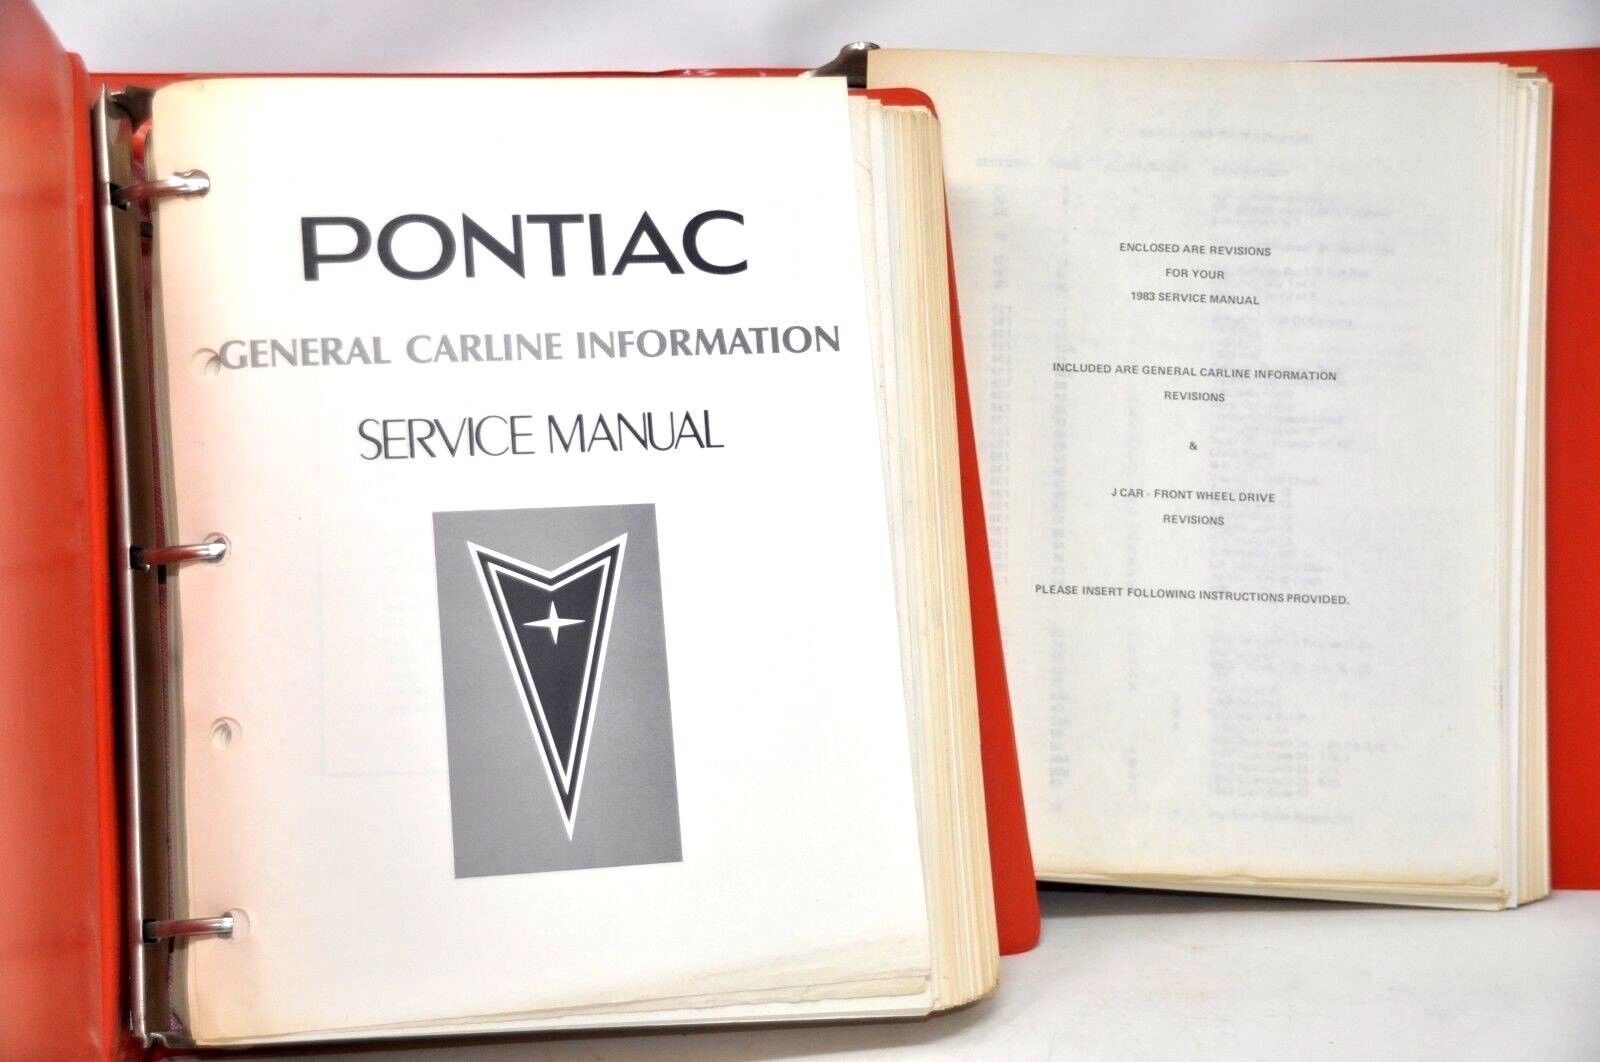 2 Vol. 1983 Pontiac General Car Line Information Service Manual S-8210G & Revisi